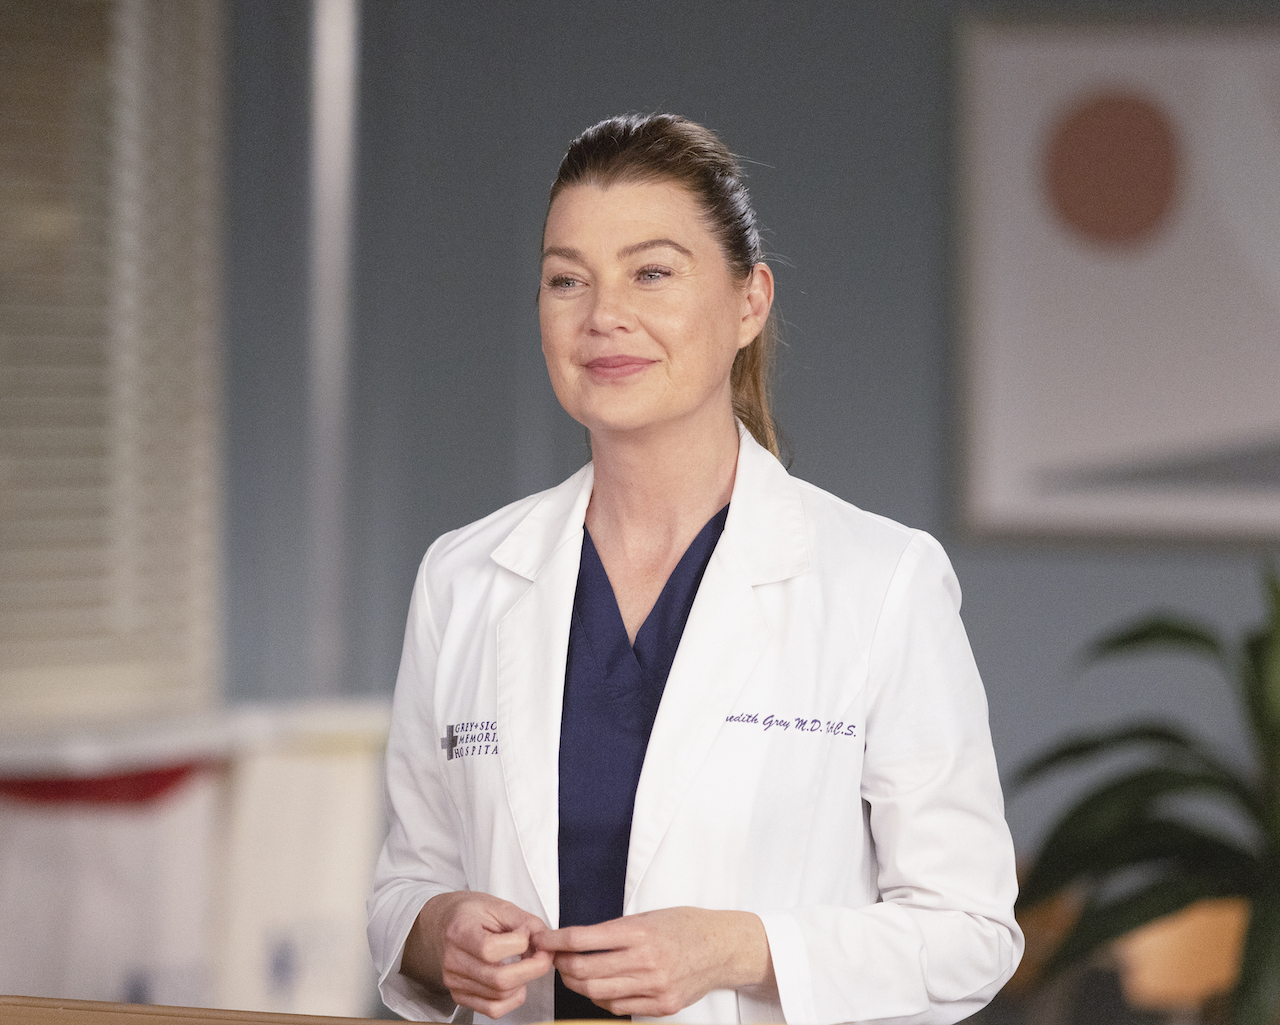 Ellen Pompeo as Meredith Grey wears her white doctor's coat over blue scrubs on 'Grey's Anatomy'